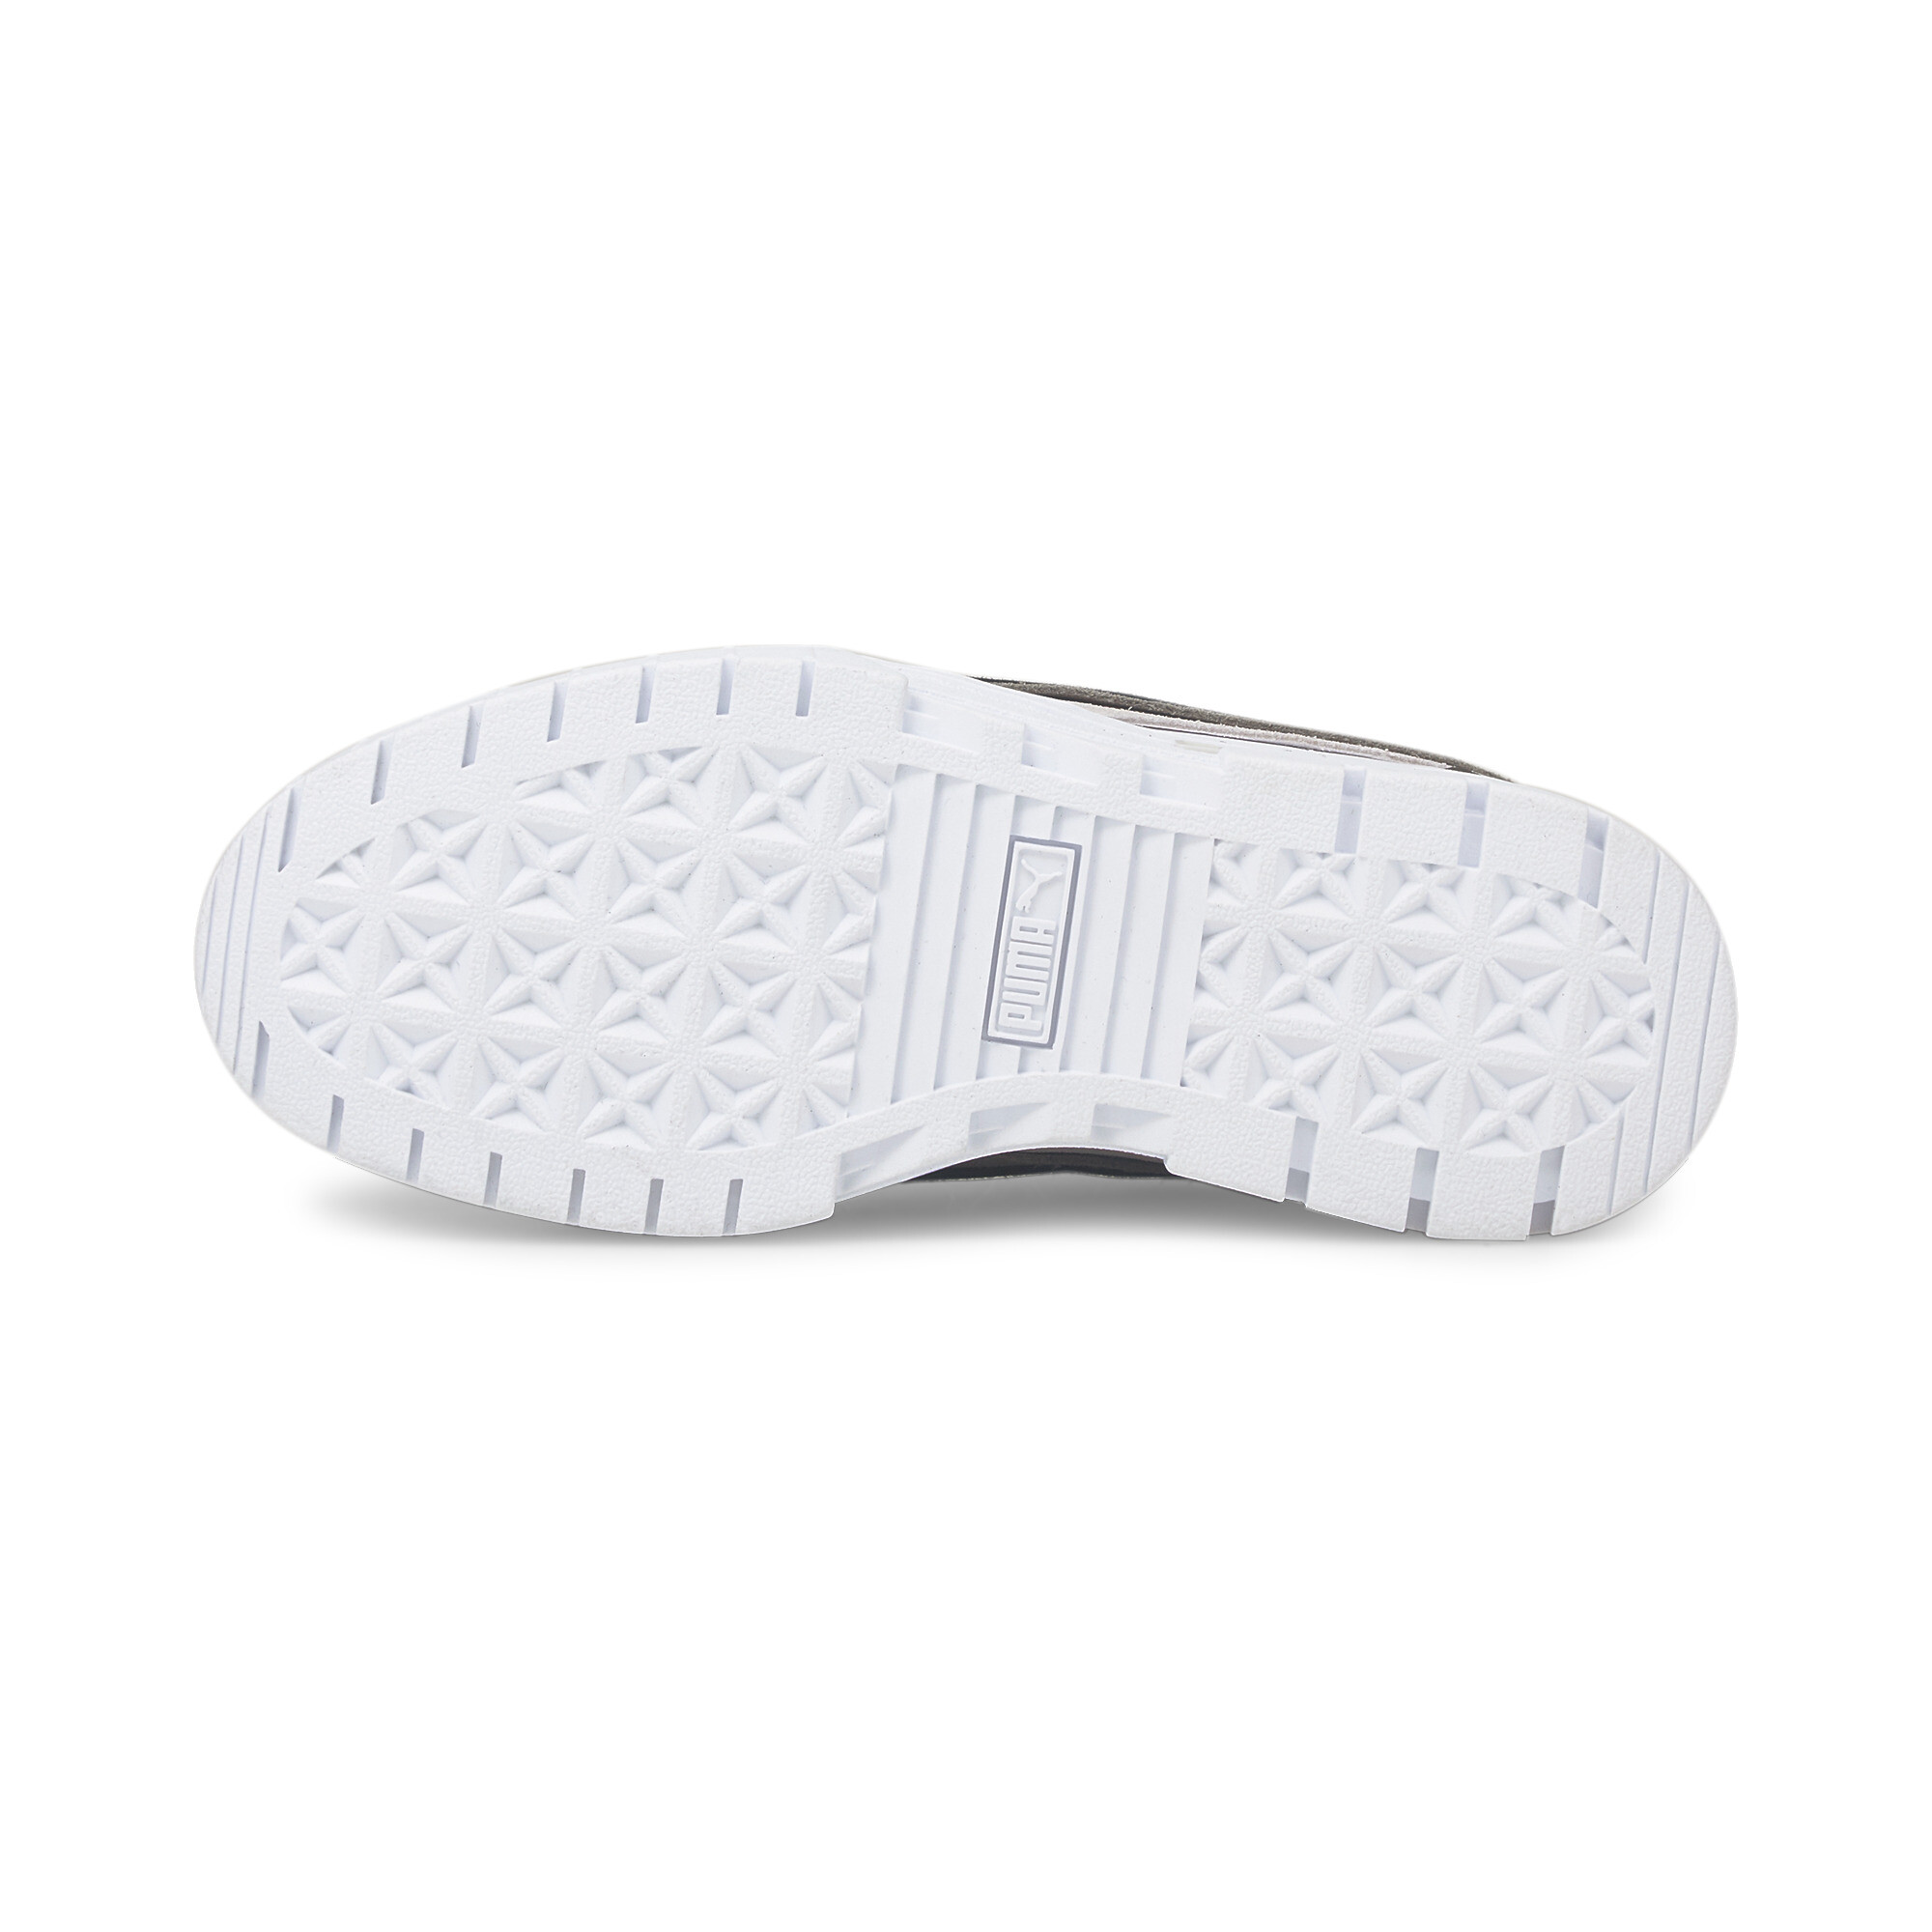 Women's PUMA Mayze Triplex Trainers Shoes In White, Size EU 35.5